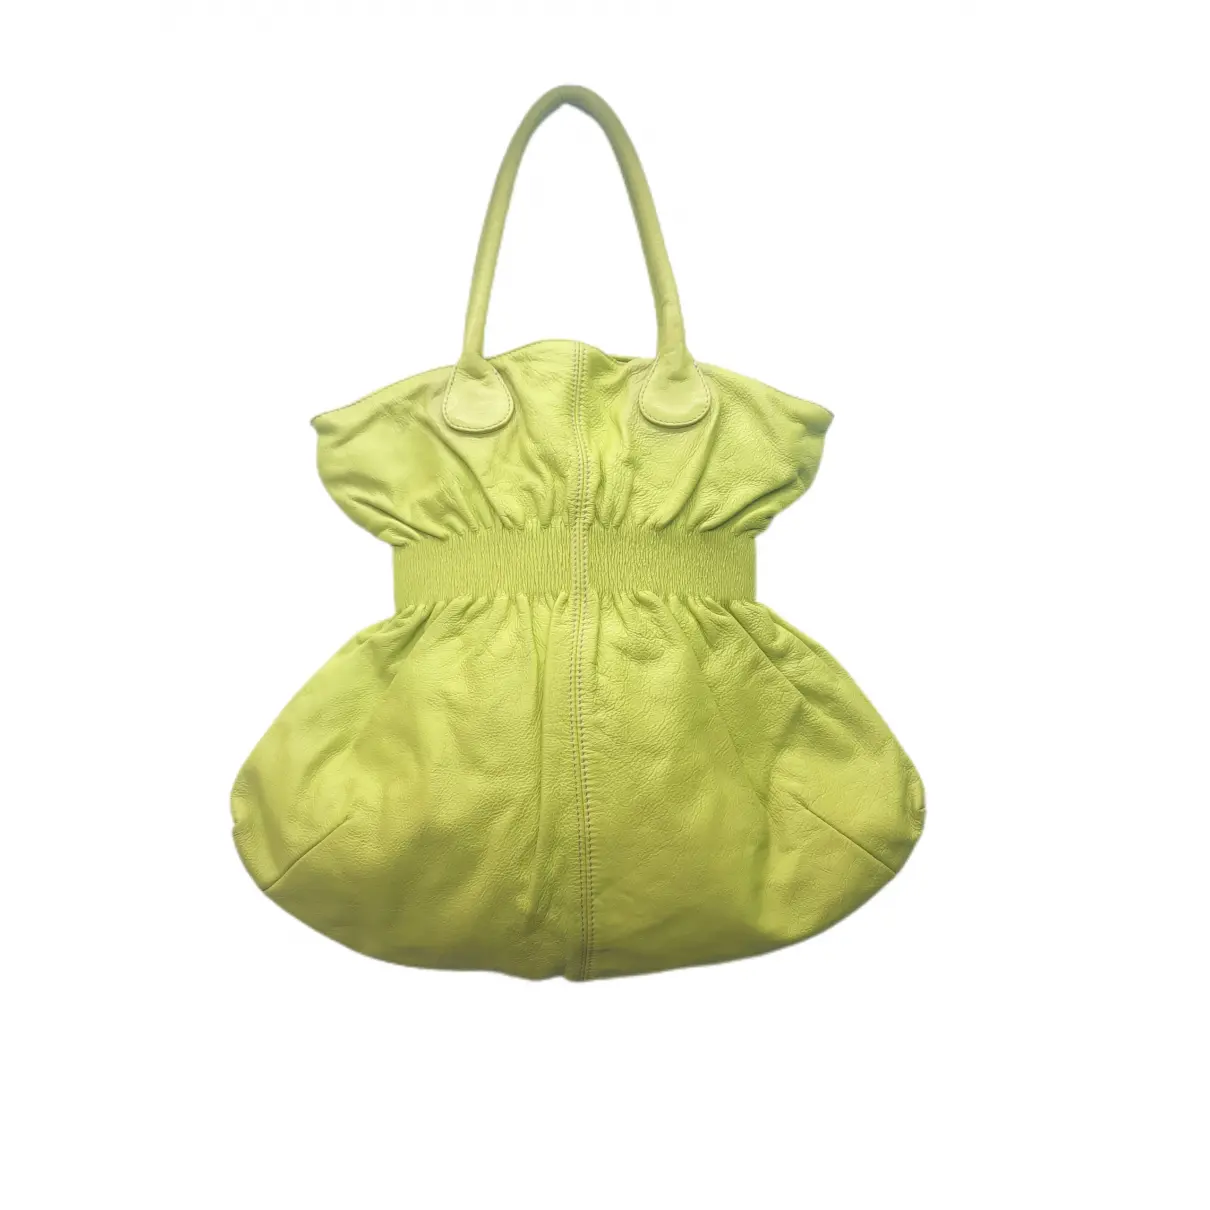 Buy Max Mara Leather handbag online